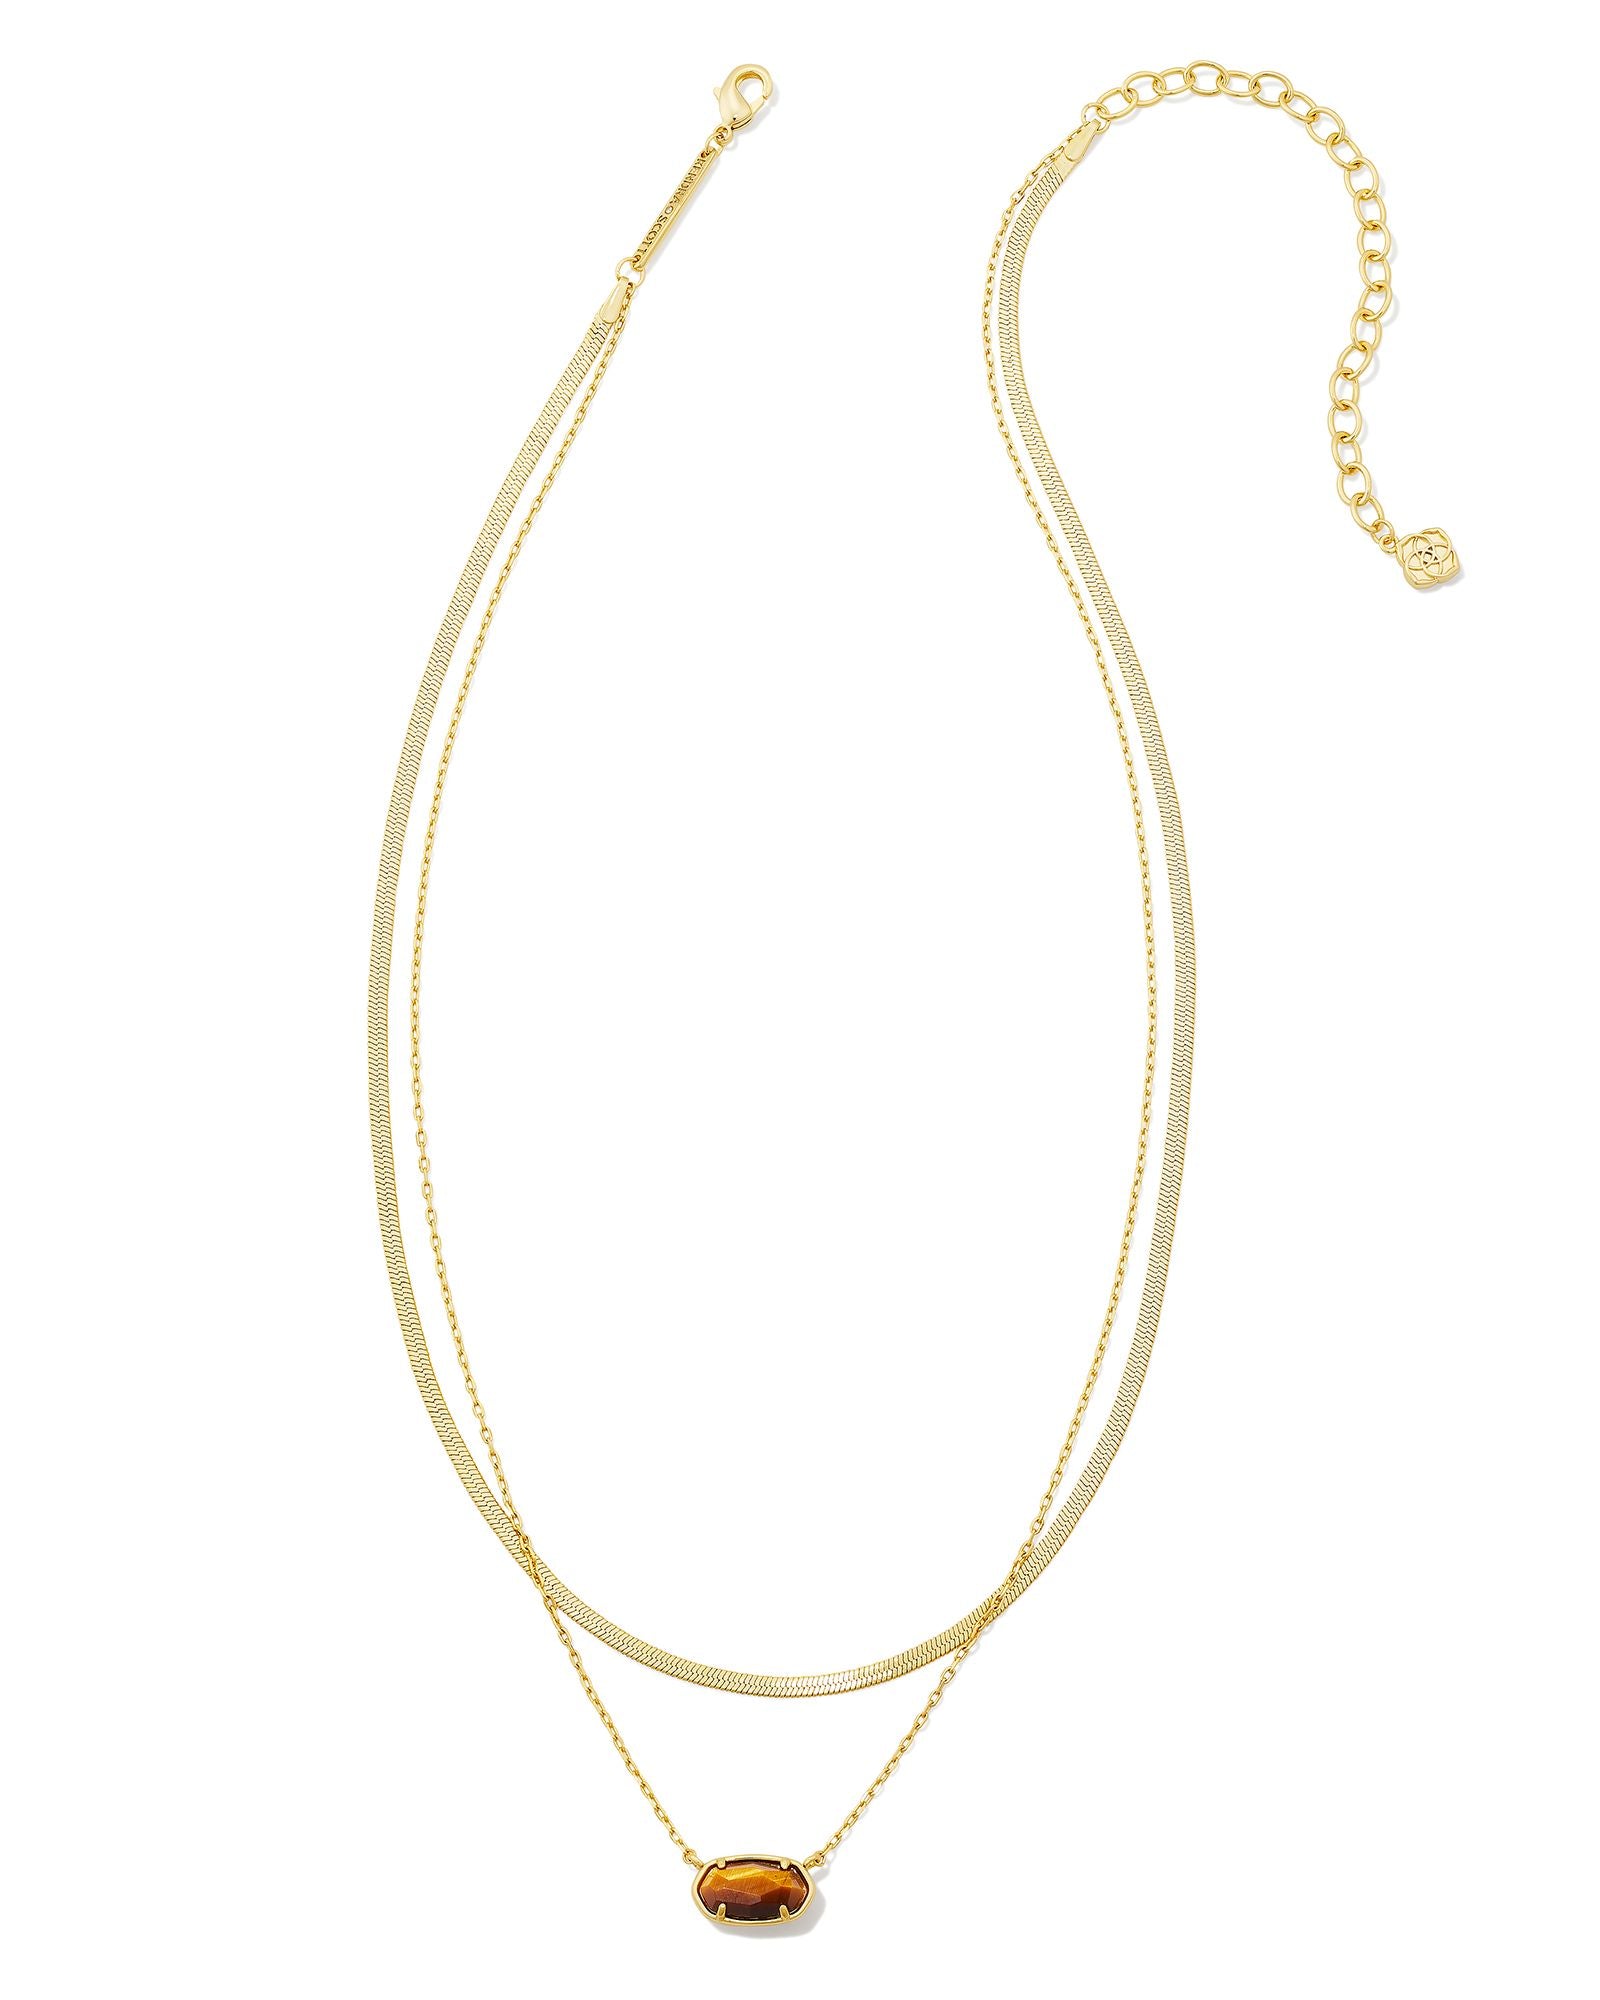 Kendra Scott Grayson Herringbone Multi Strand Necklace in Brown Tigers Eye and Gold